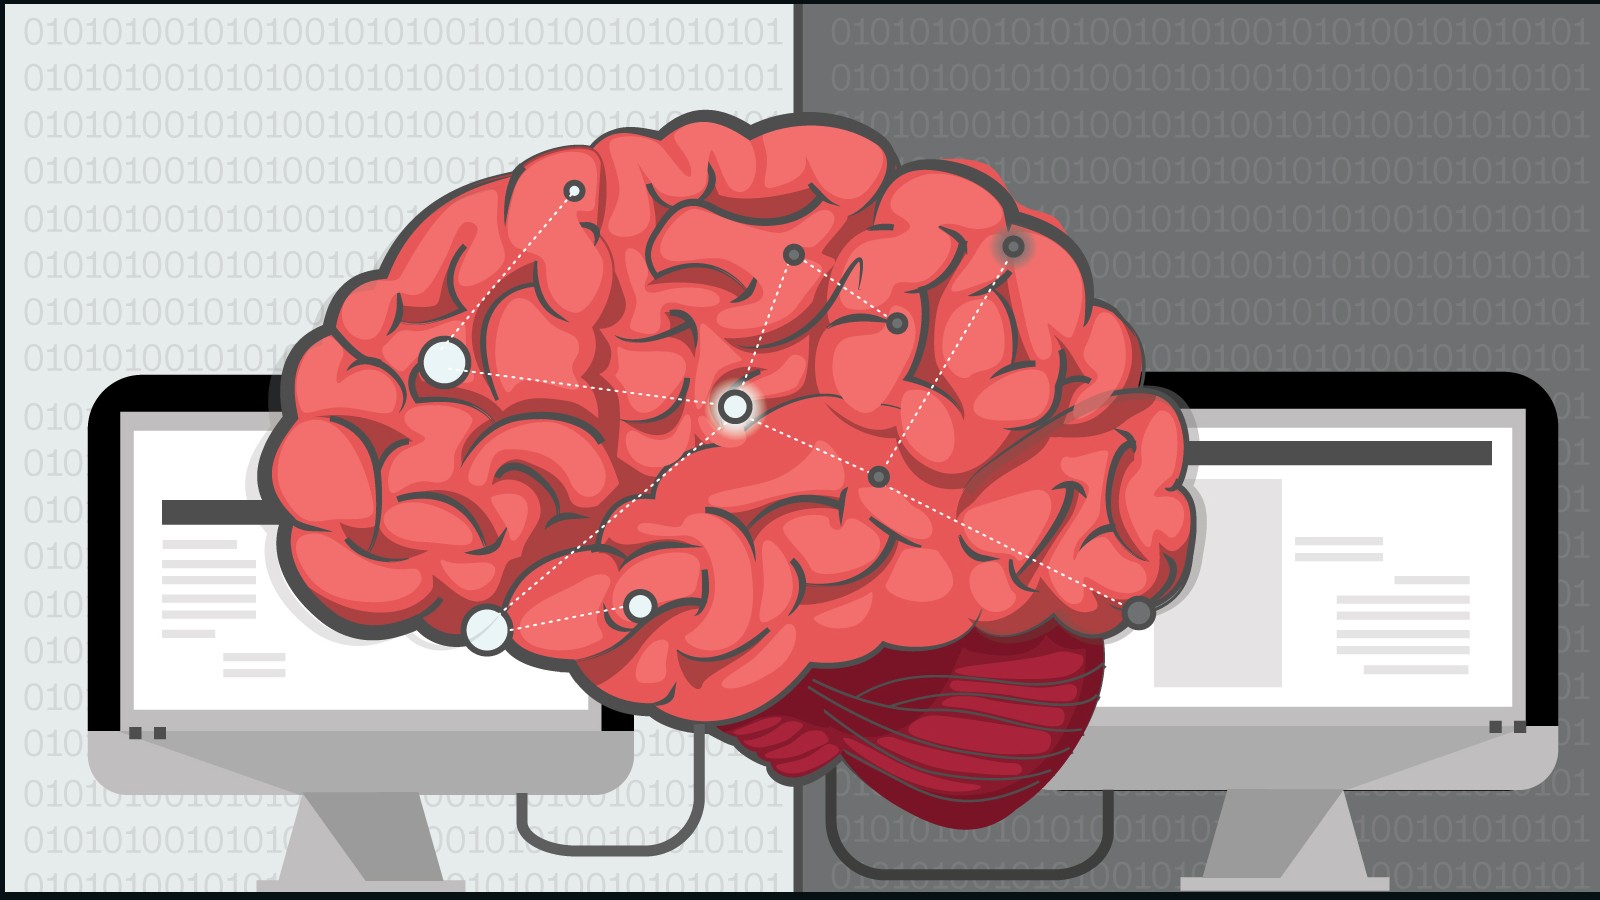 Brain coding. Мозг компьютера. Механический мозг. Мощный мозг. Интерфейс в мозг.